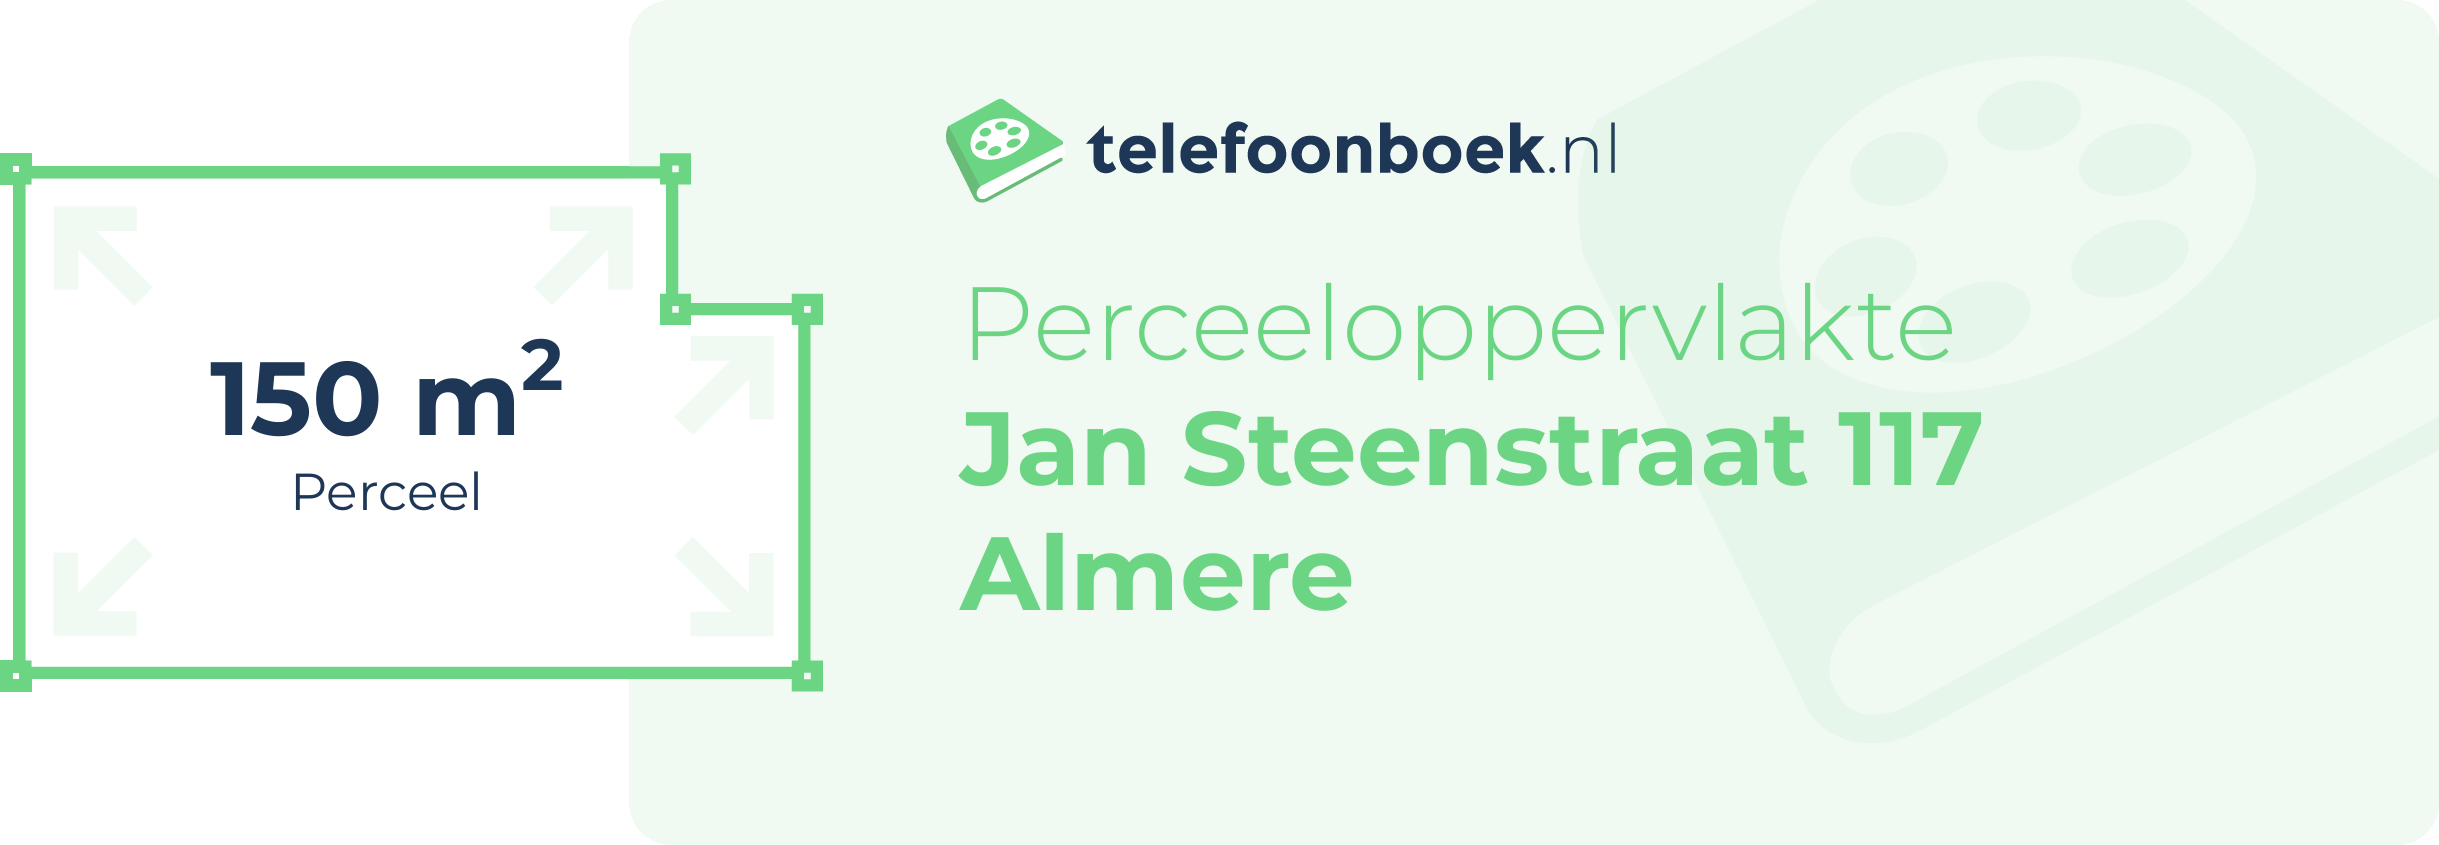 Perceeloppervlakte Jan Steenstraat 117 Almere